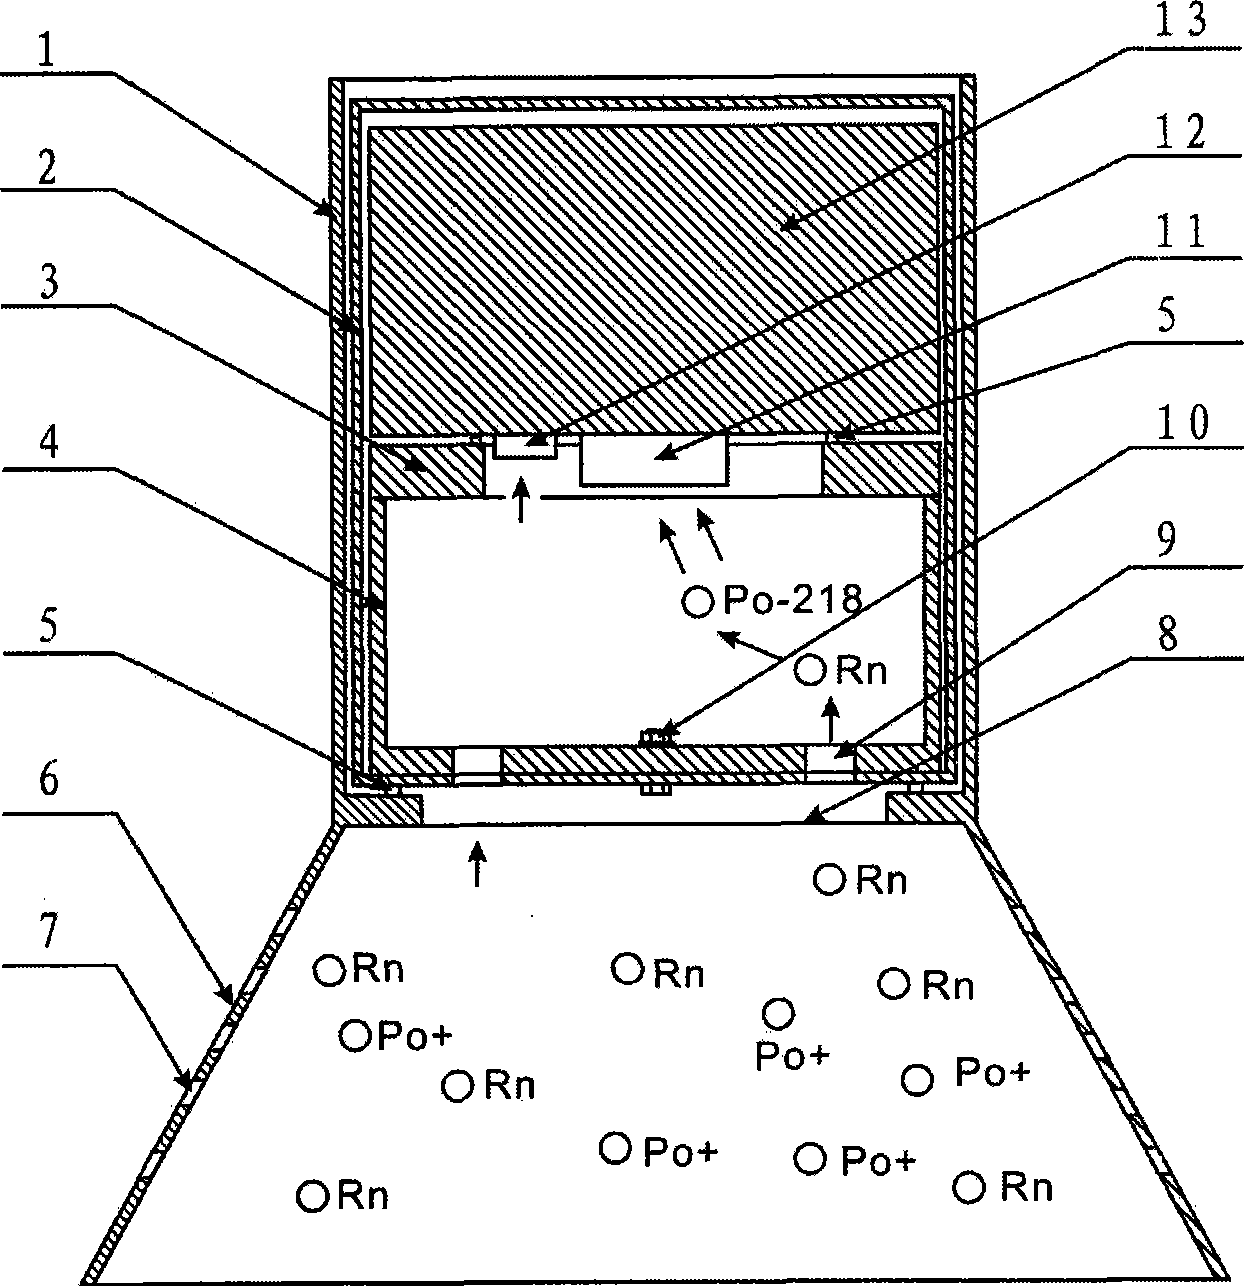 Multi-point diffusion type alpha energy spectrum cumulated soil radon measuring method